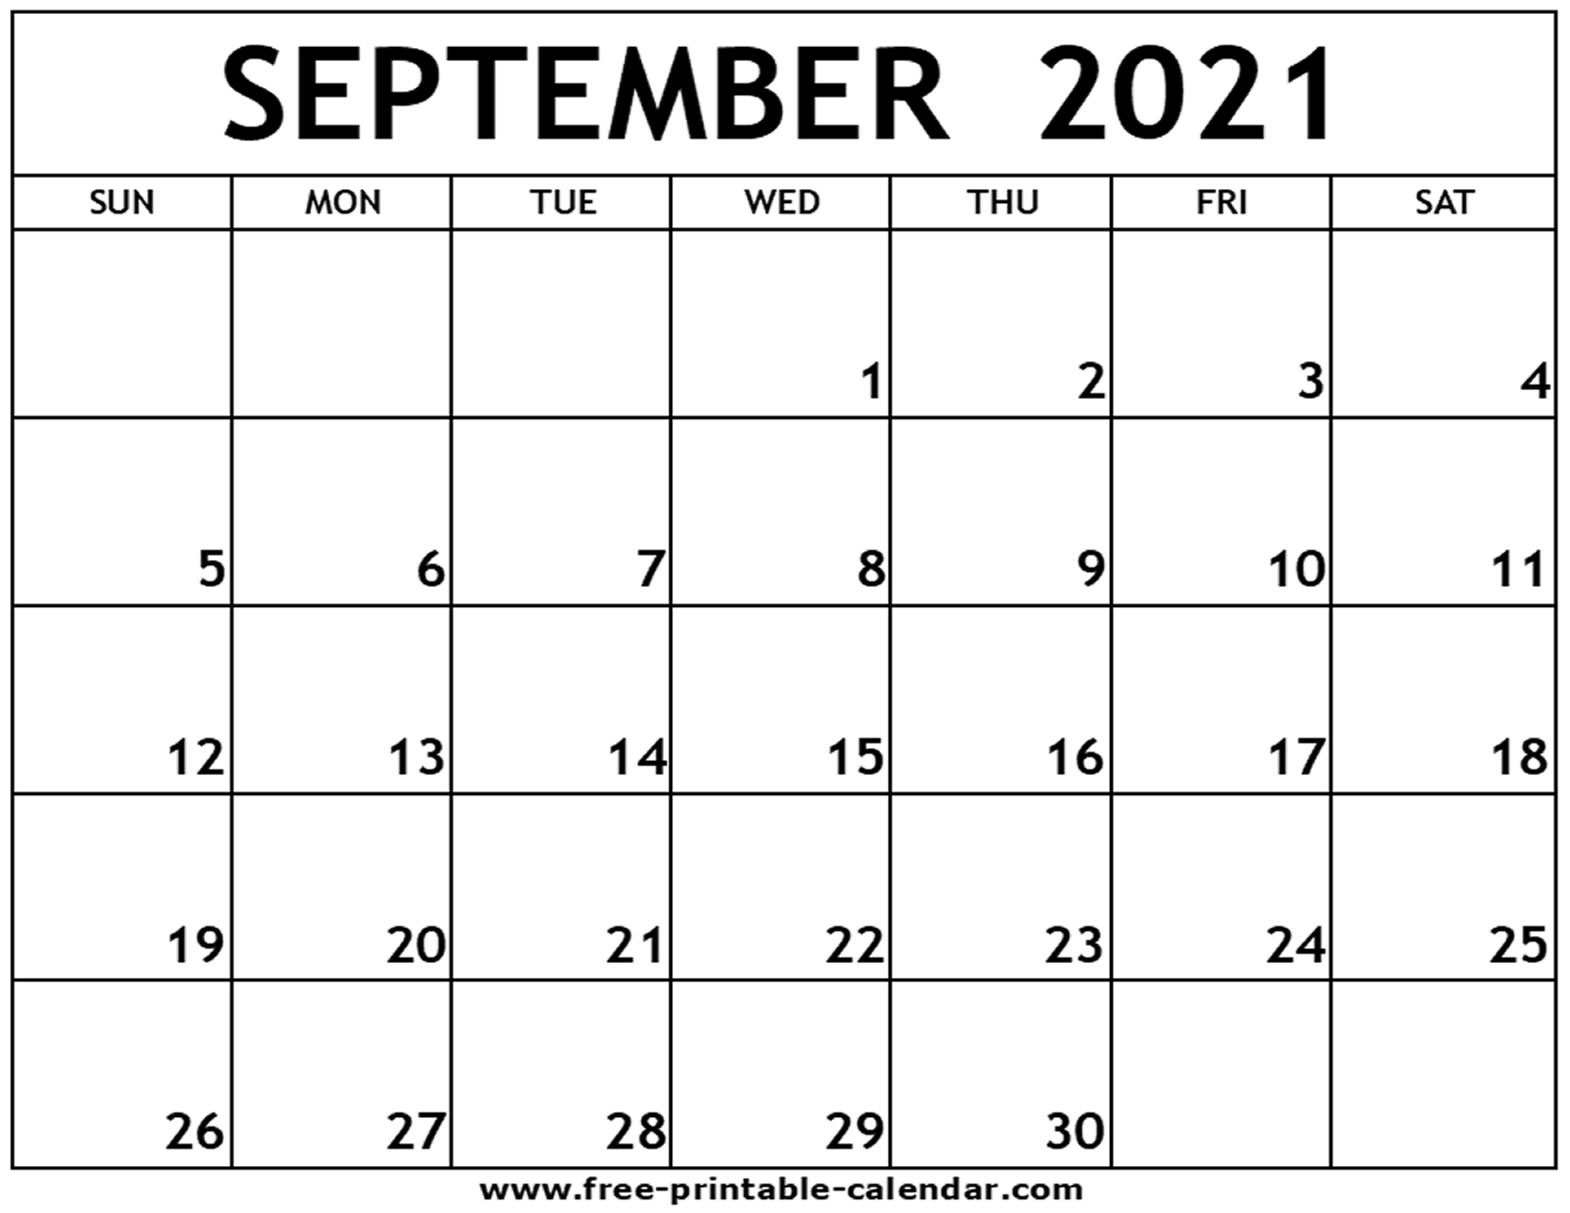 September 2021 Calendar | Free 2021 Printable Calendars Print September 2021 Calendar